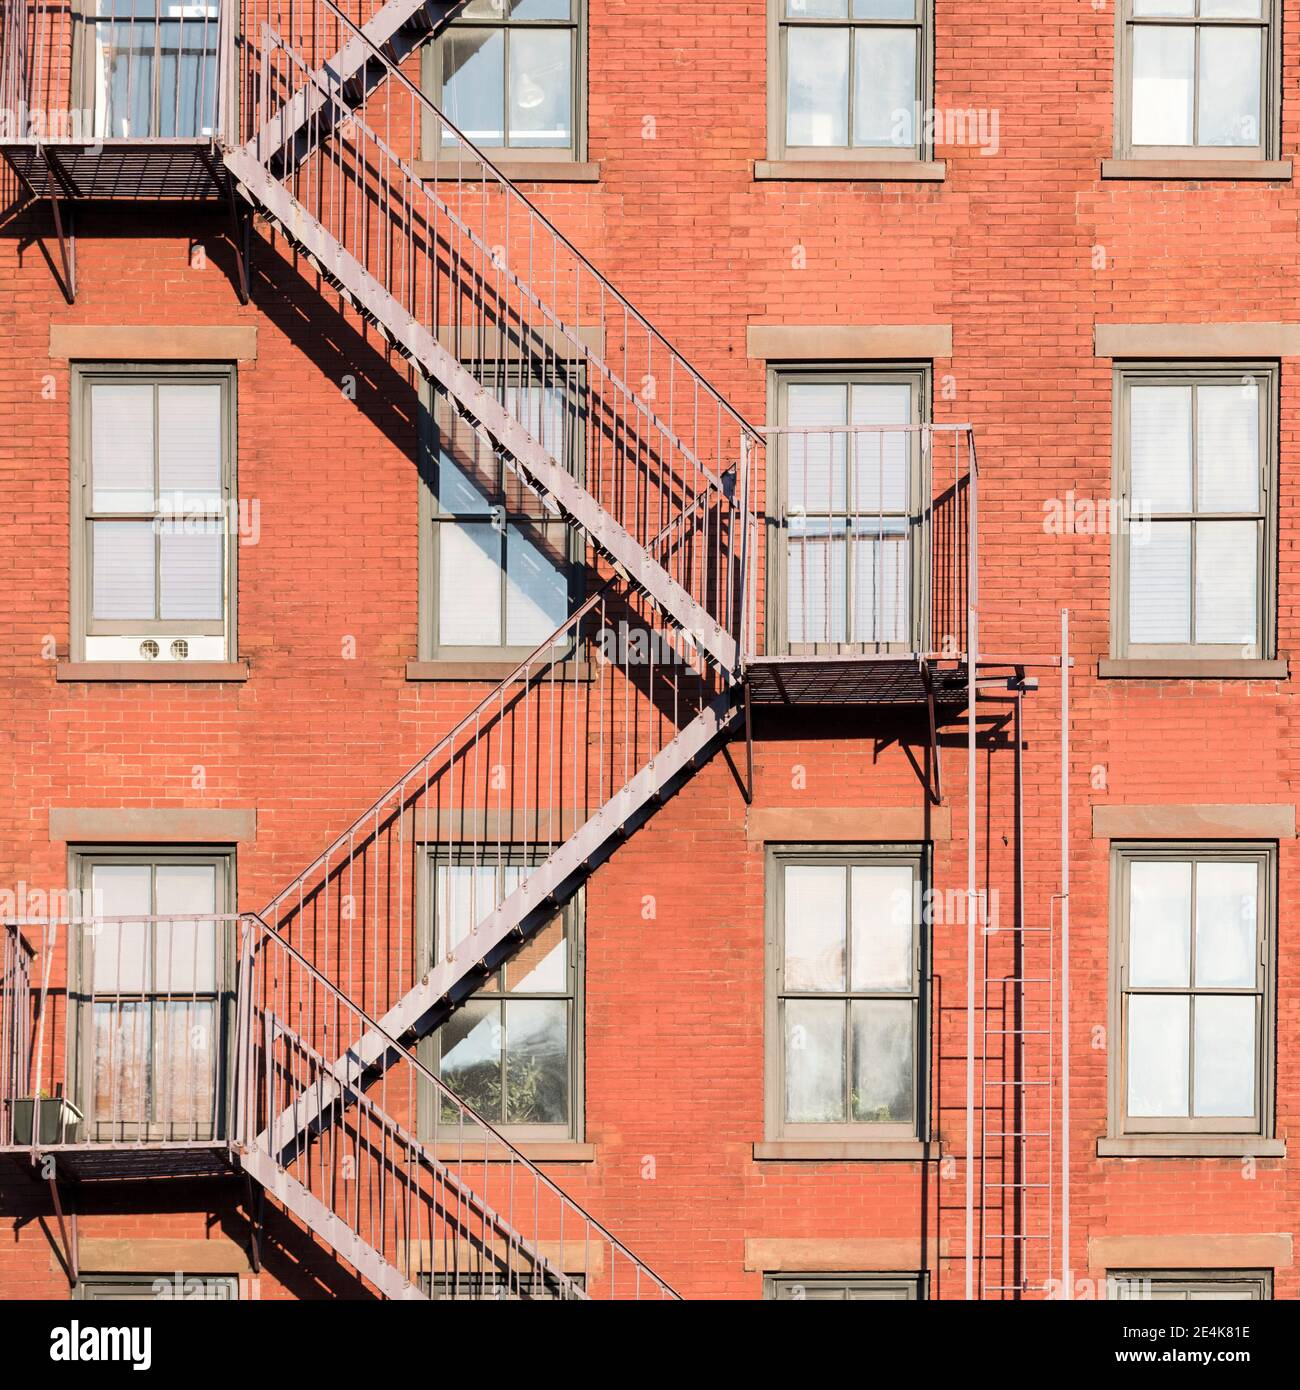 USA, New York, New York City, Fire escape on brick apartment building in Greenwich Village Stock Photo